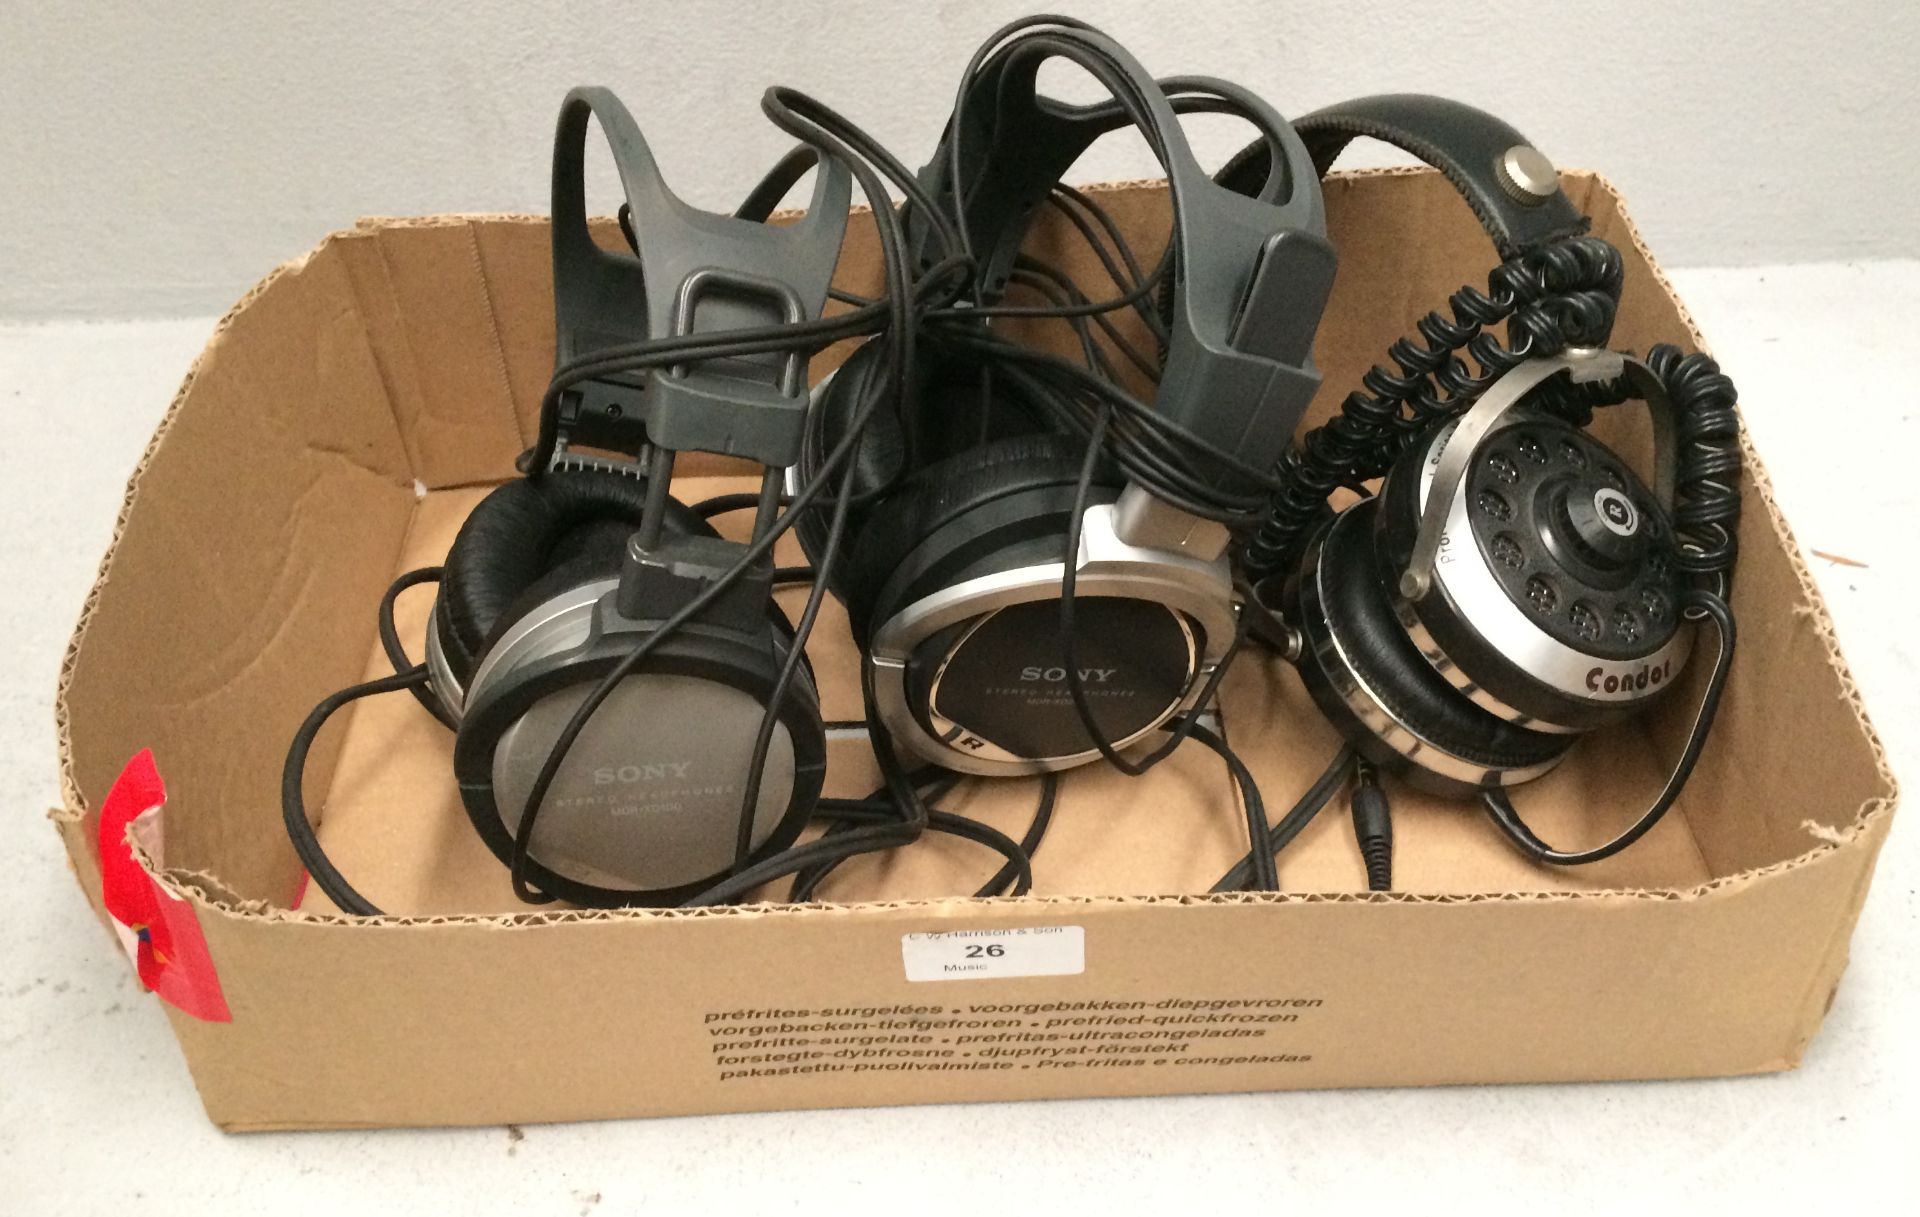 Three pairs of headphones - 1 x Condor CST3000 Professional Stereo,